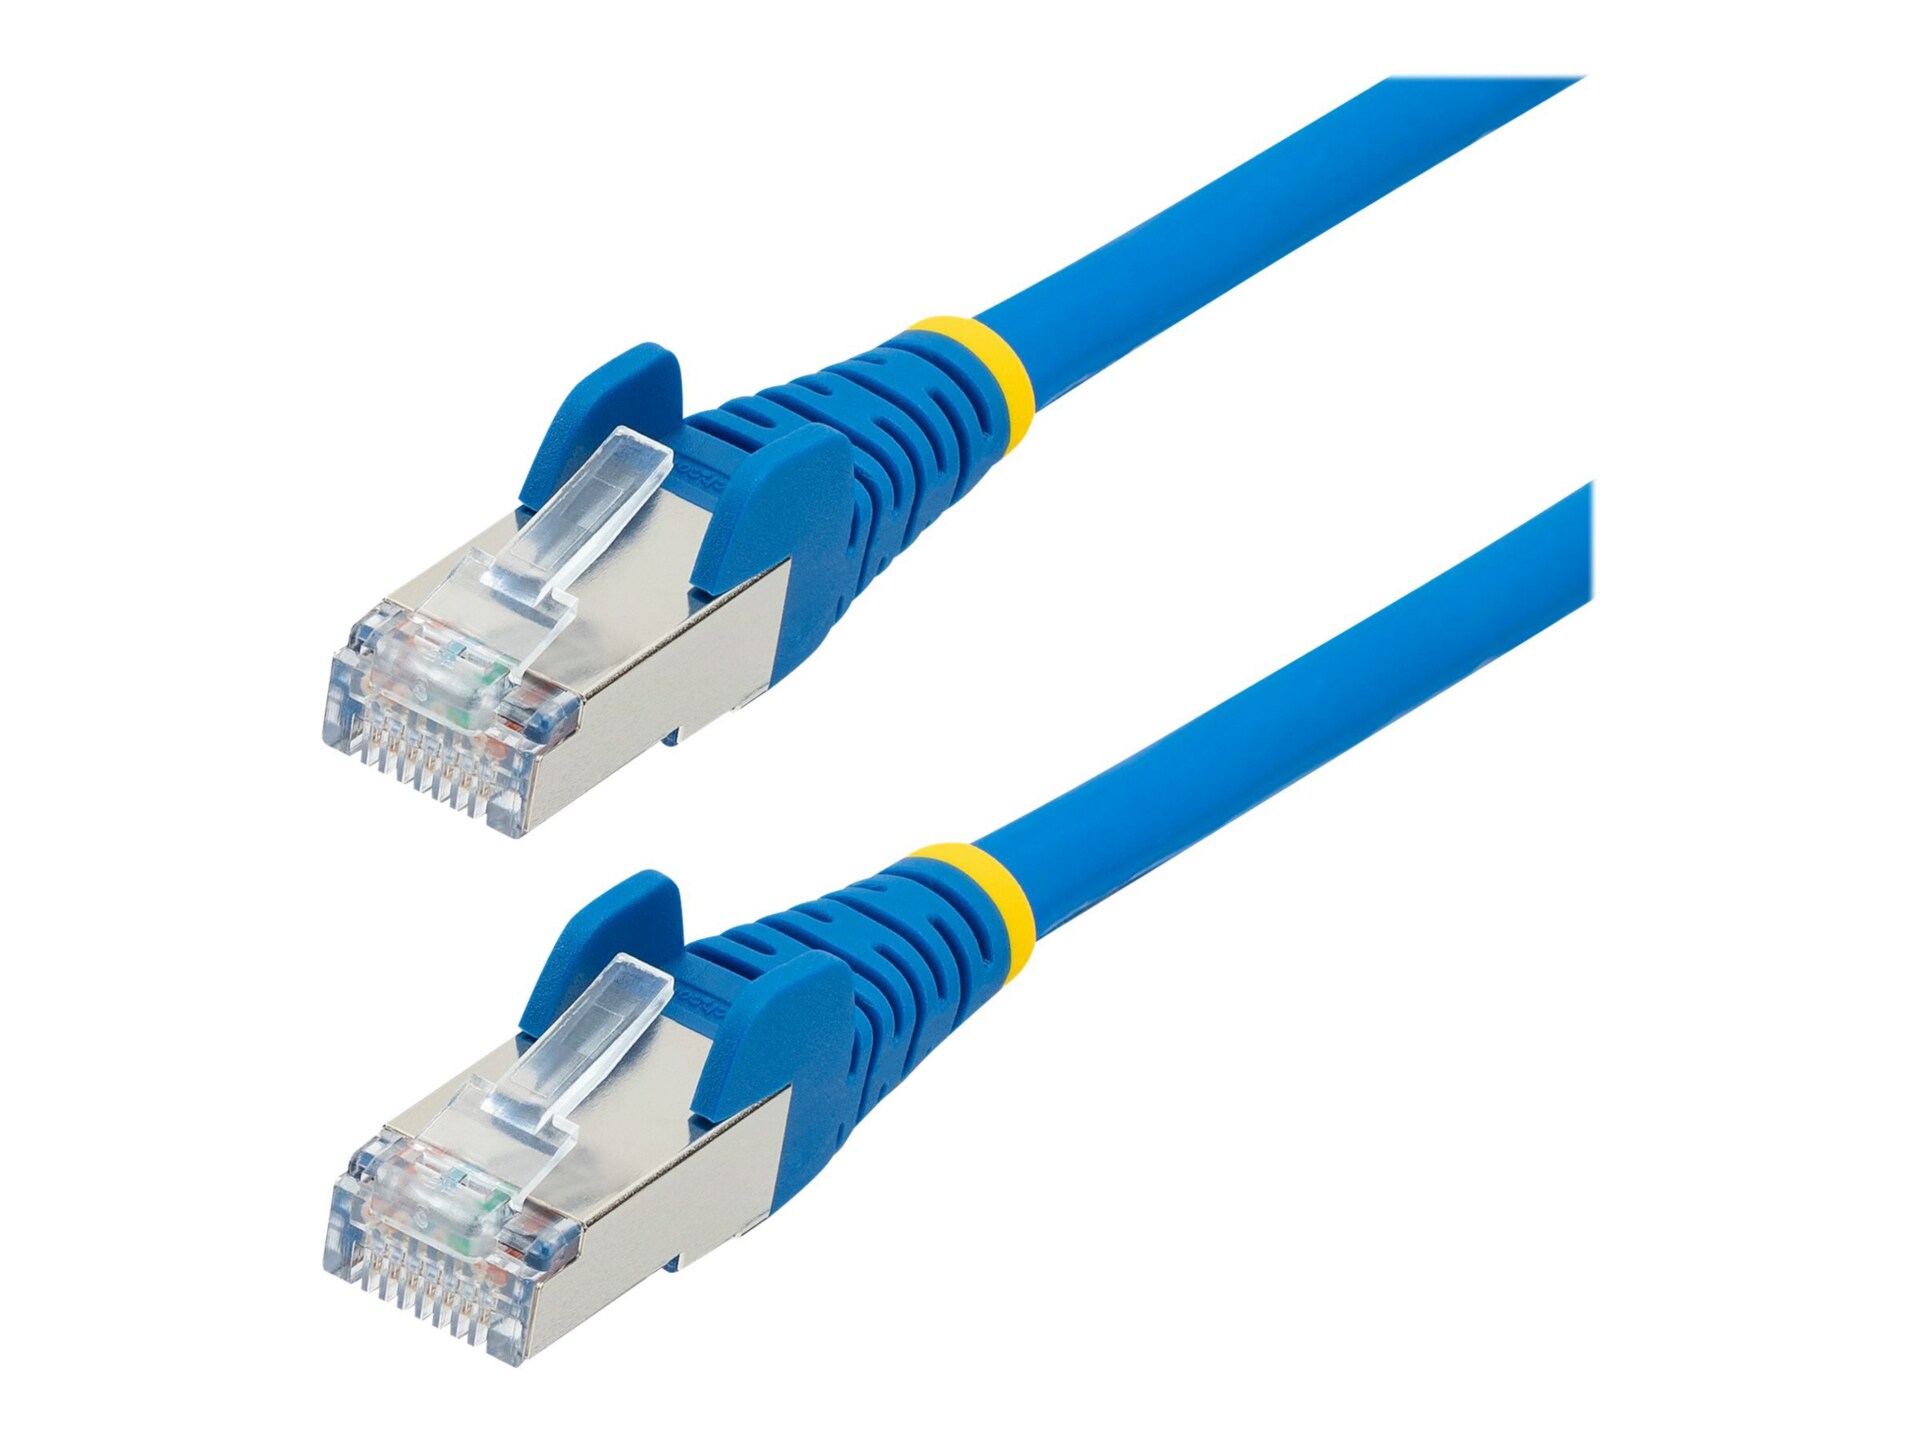 StarTech.com 12ft CAT6a Ethernet Cable, Blue Low Smoke Zero Halogen (LSZH) 10 GbE 100W PoE S/FTP Snagless RJ-45 Network